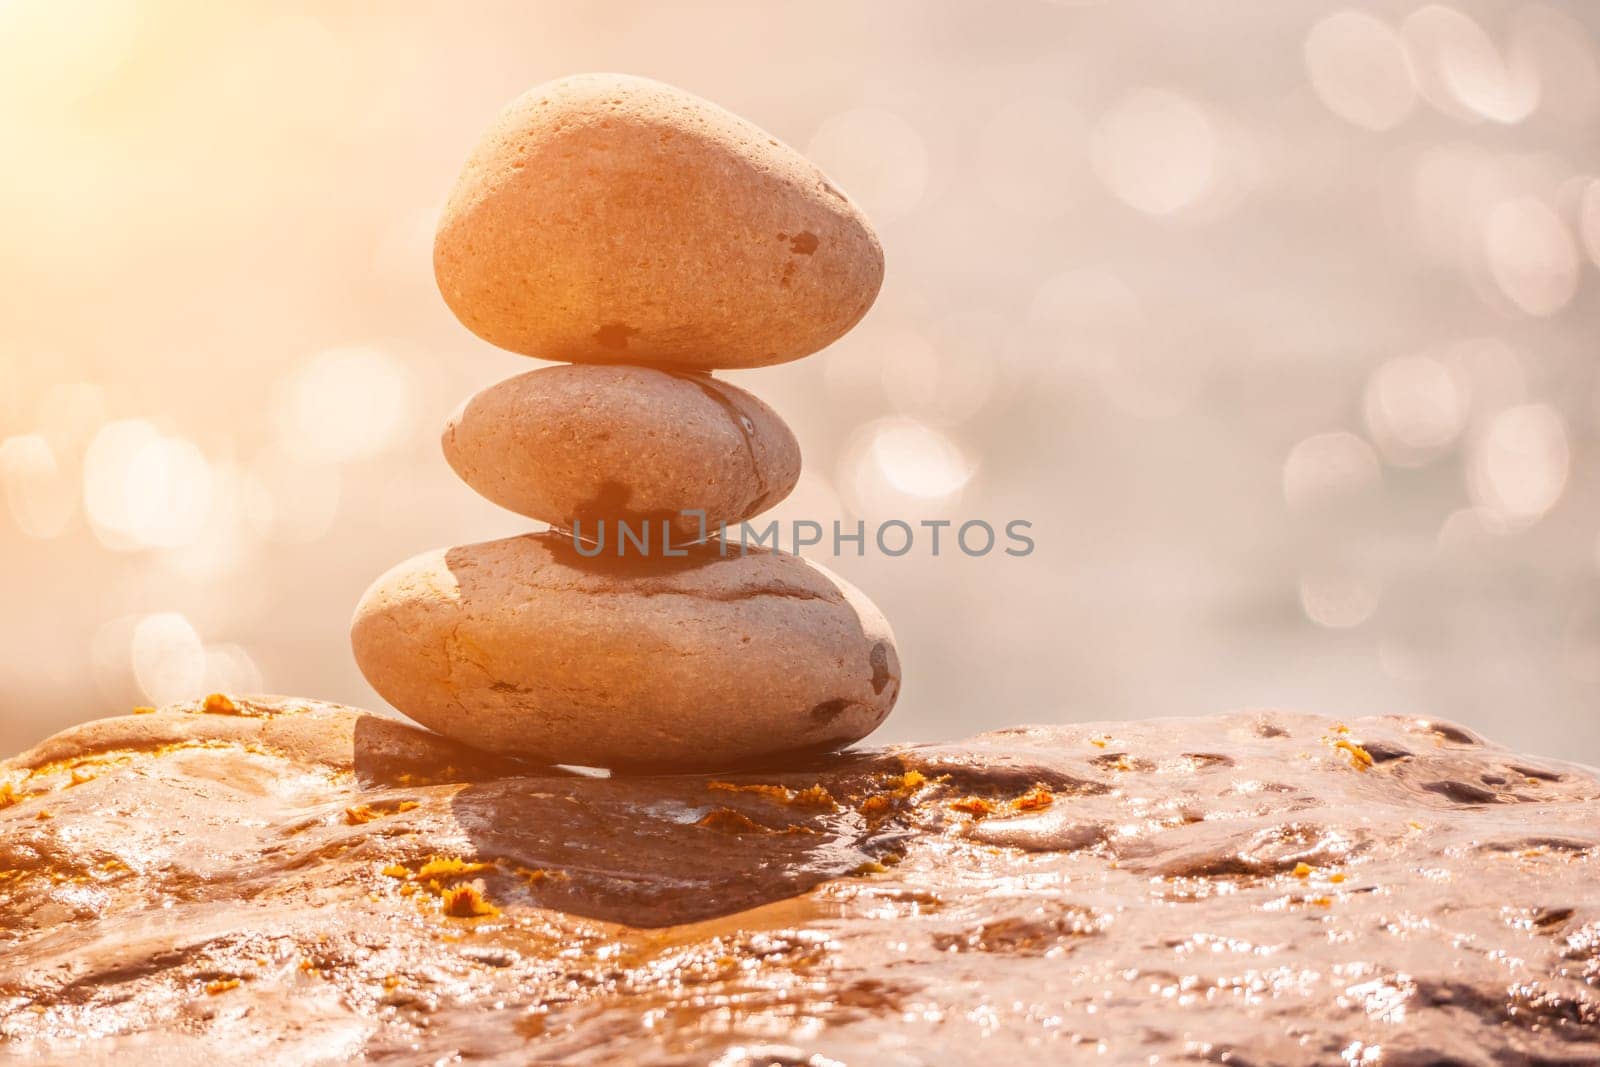 Balanced Pebbles Pyramid on the Beach on Sunny Day and Clear Sky at Sunset. Blue Sea on Background Selective focus, zen stones on sea beach, meditation, spa, harmony, calm, balance concept.